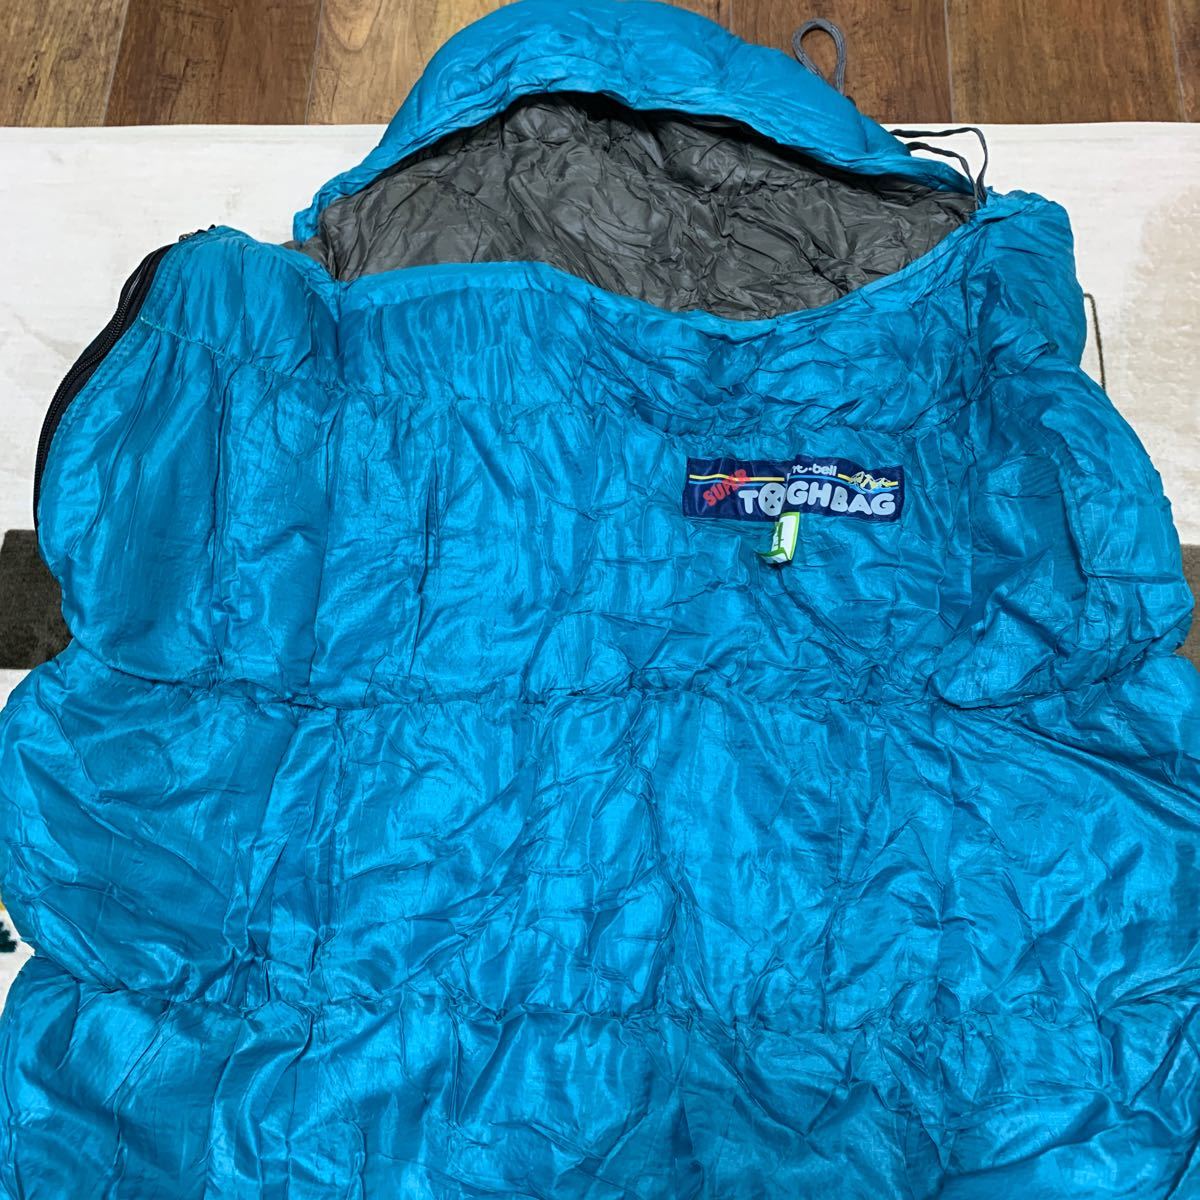 mont-bell Mont Bell sleeping bag sleeping bag outdoor SUPER TOUGHBAG REGULAR